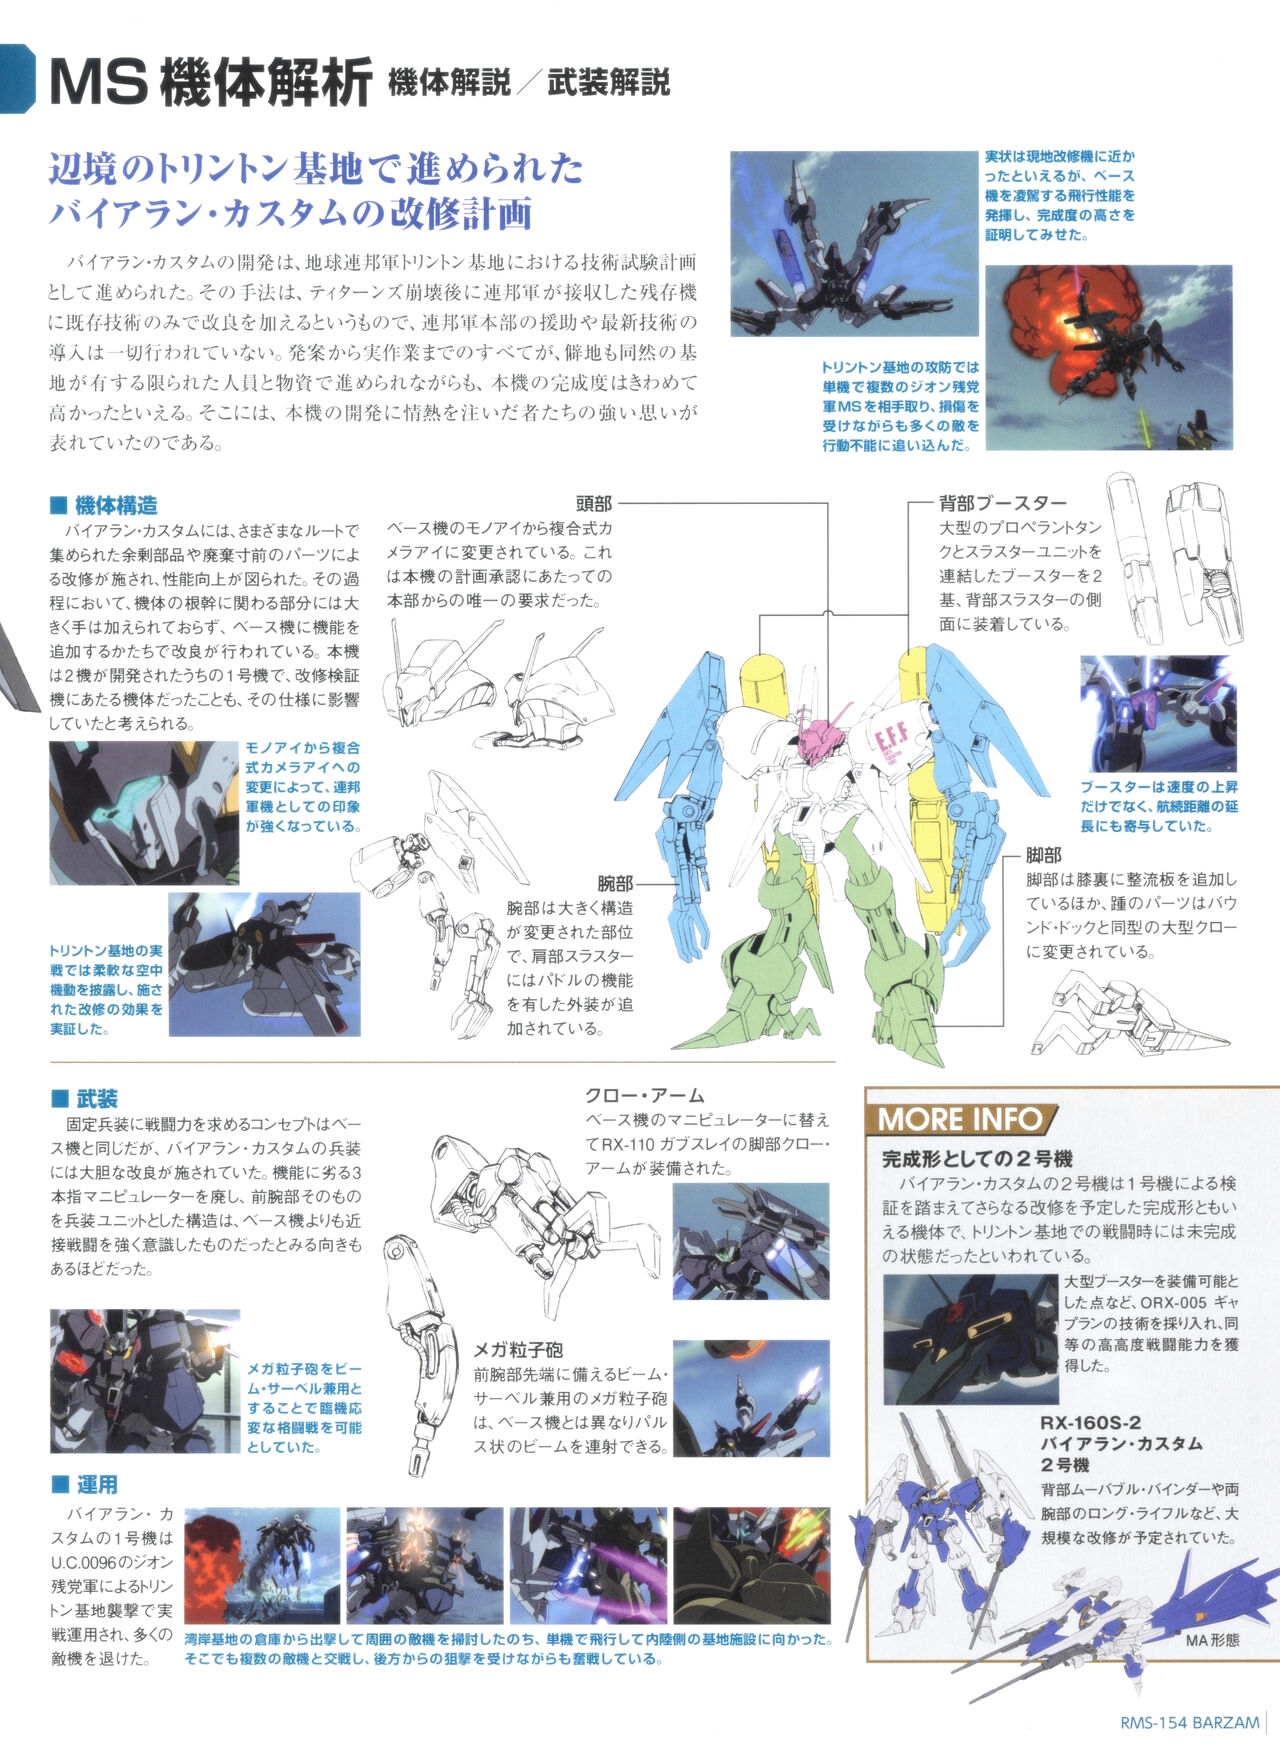 Gundam Mobile Suit Bible 103 14